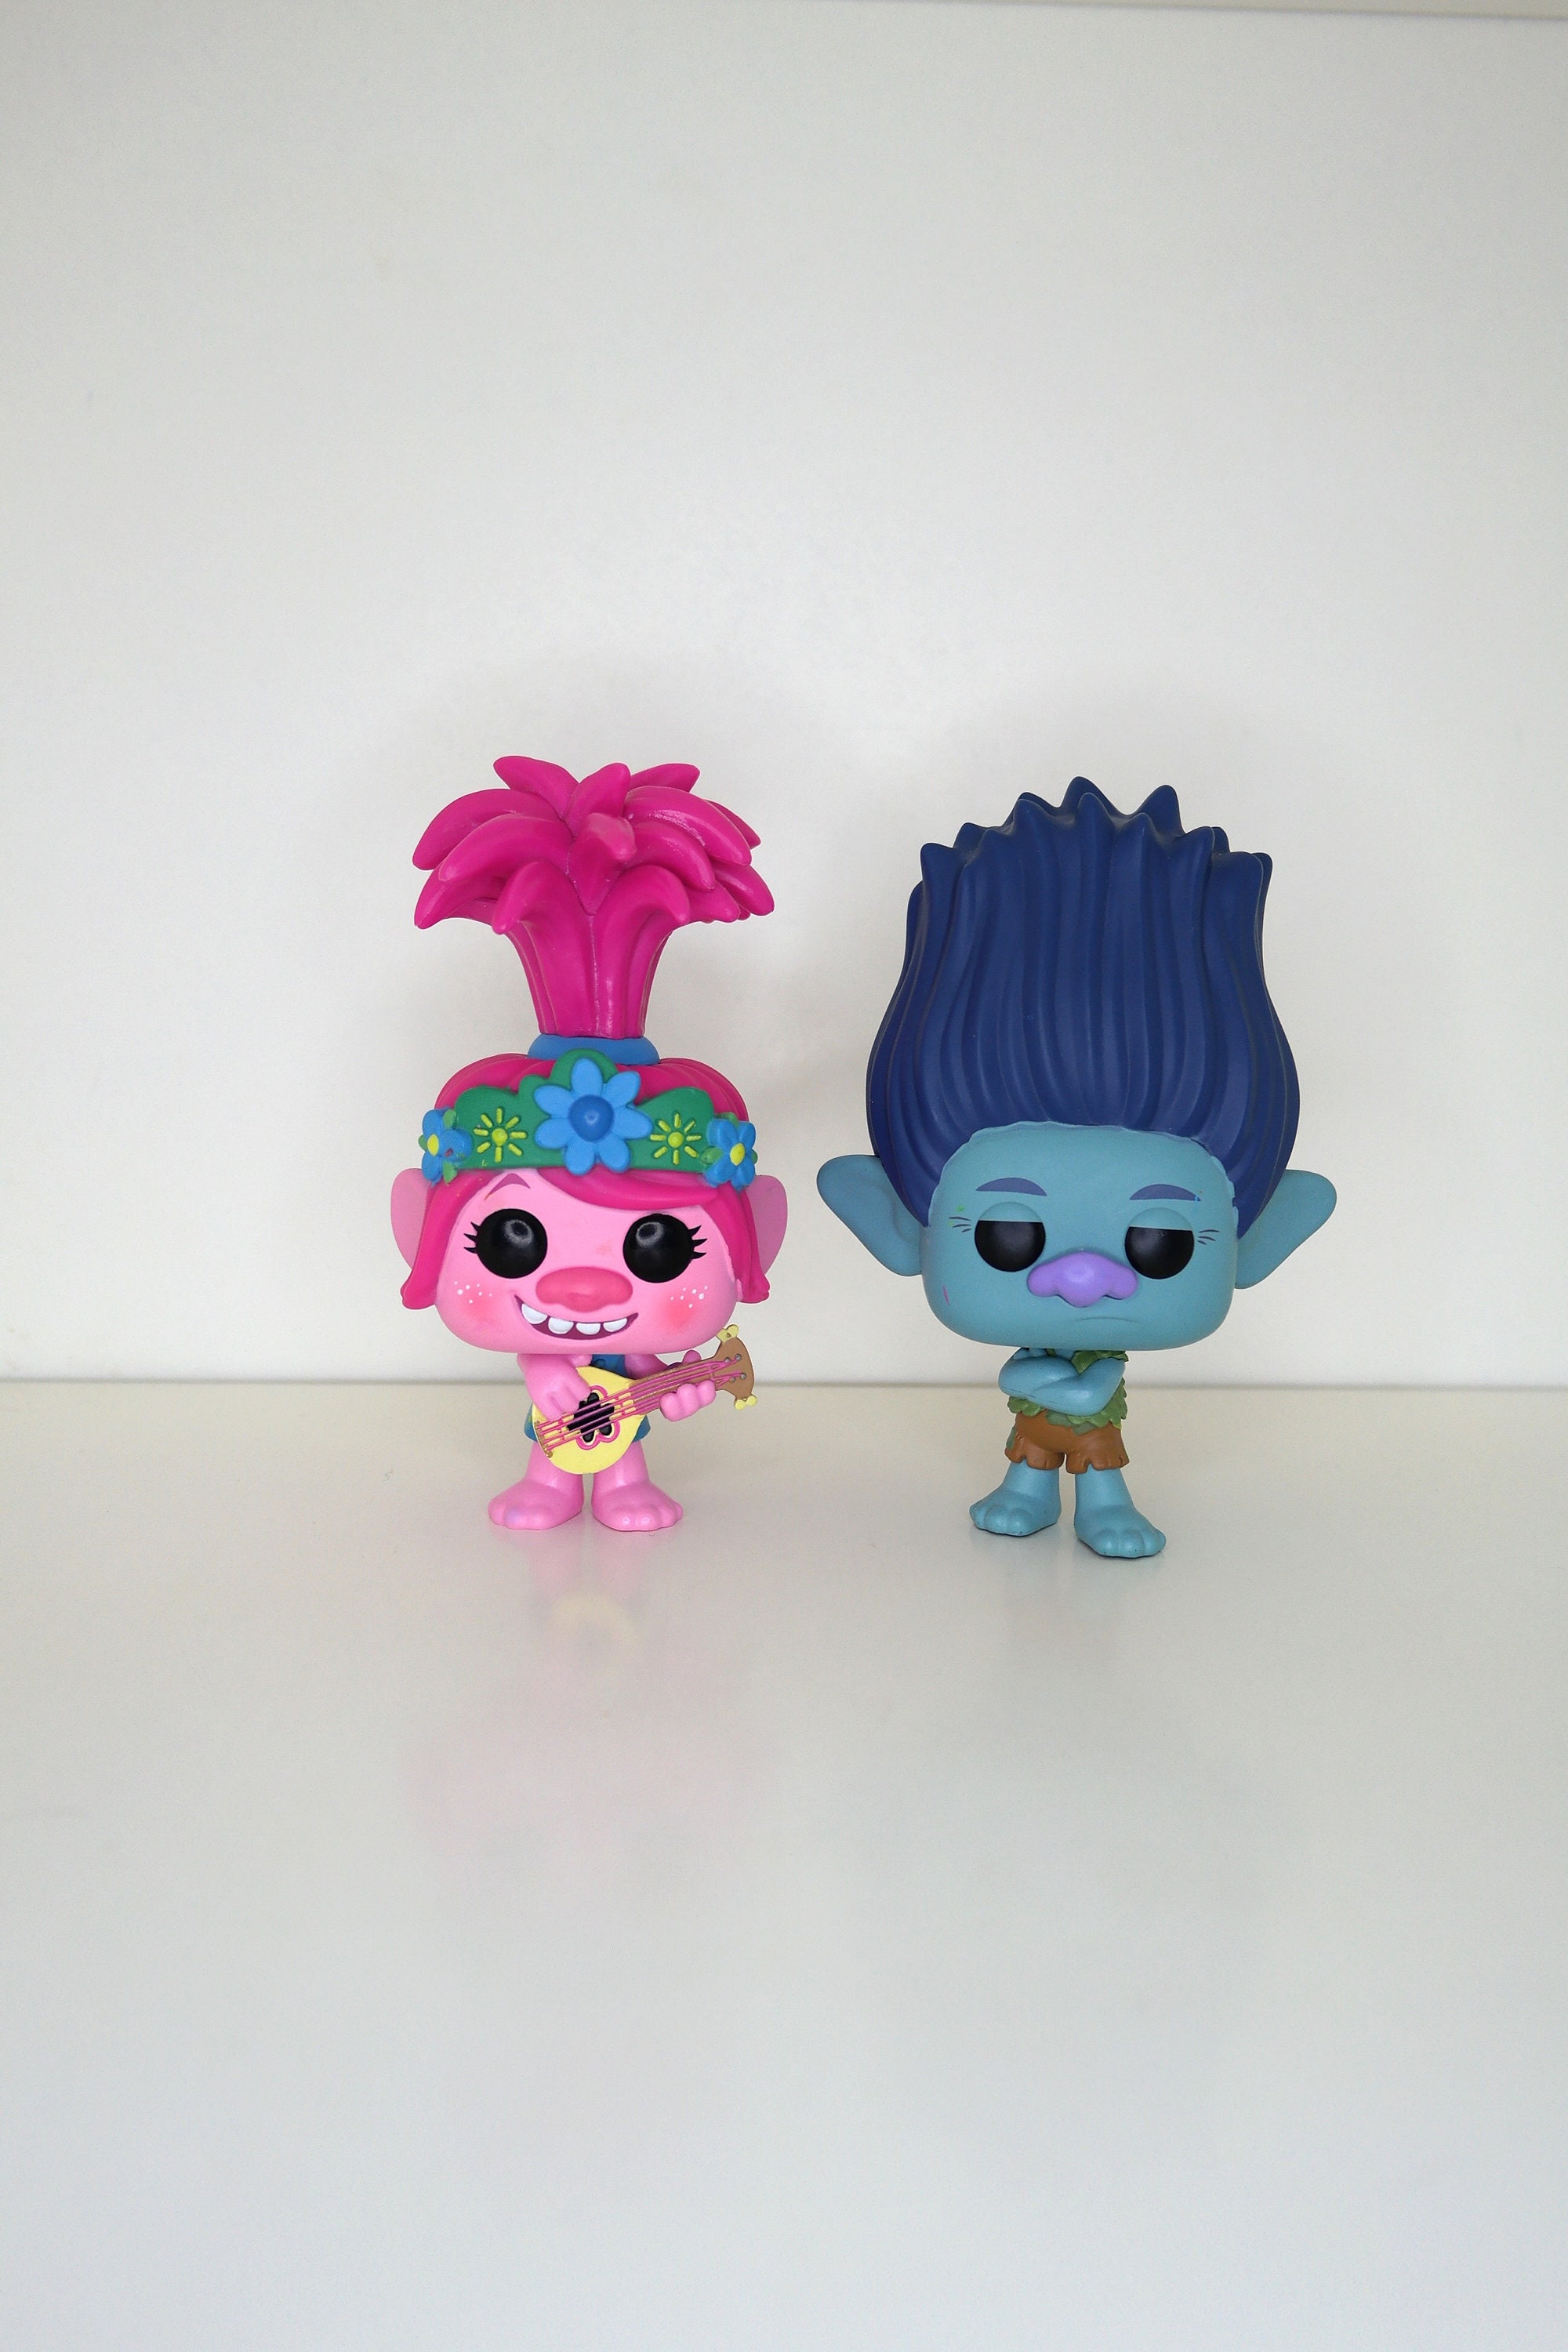 Hasbro Play-Doh Trolls World Tour Rainbow Hair Poppy Styling